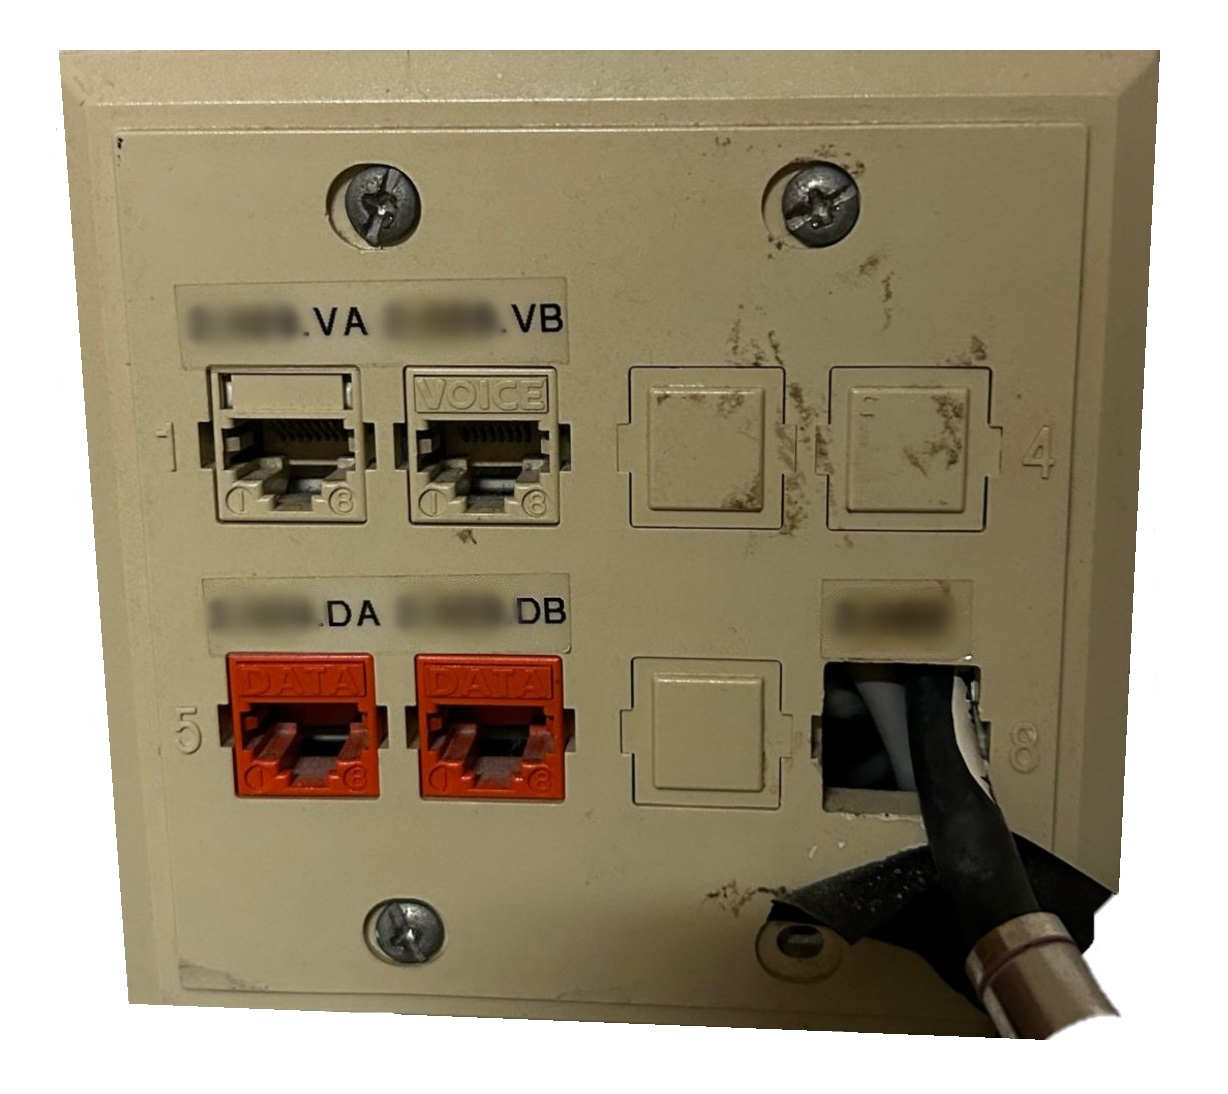 Ethernet port with 4 jacks, two uncolored, two orange labeled VA, VB, DA, DB